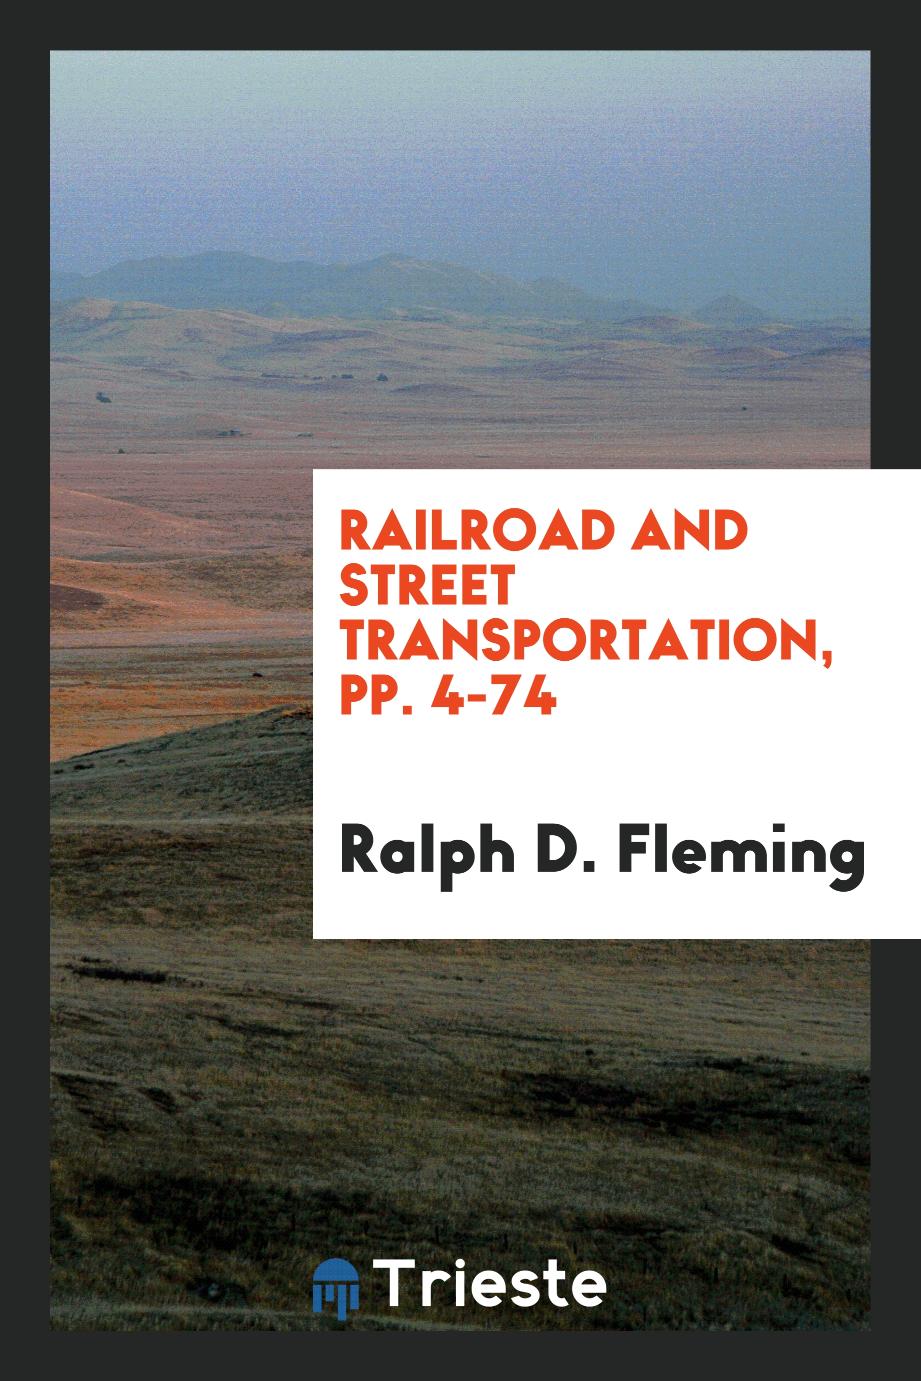 Railroad and Street Transportation, pp. 4-74